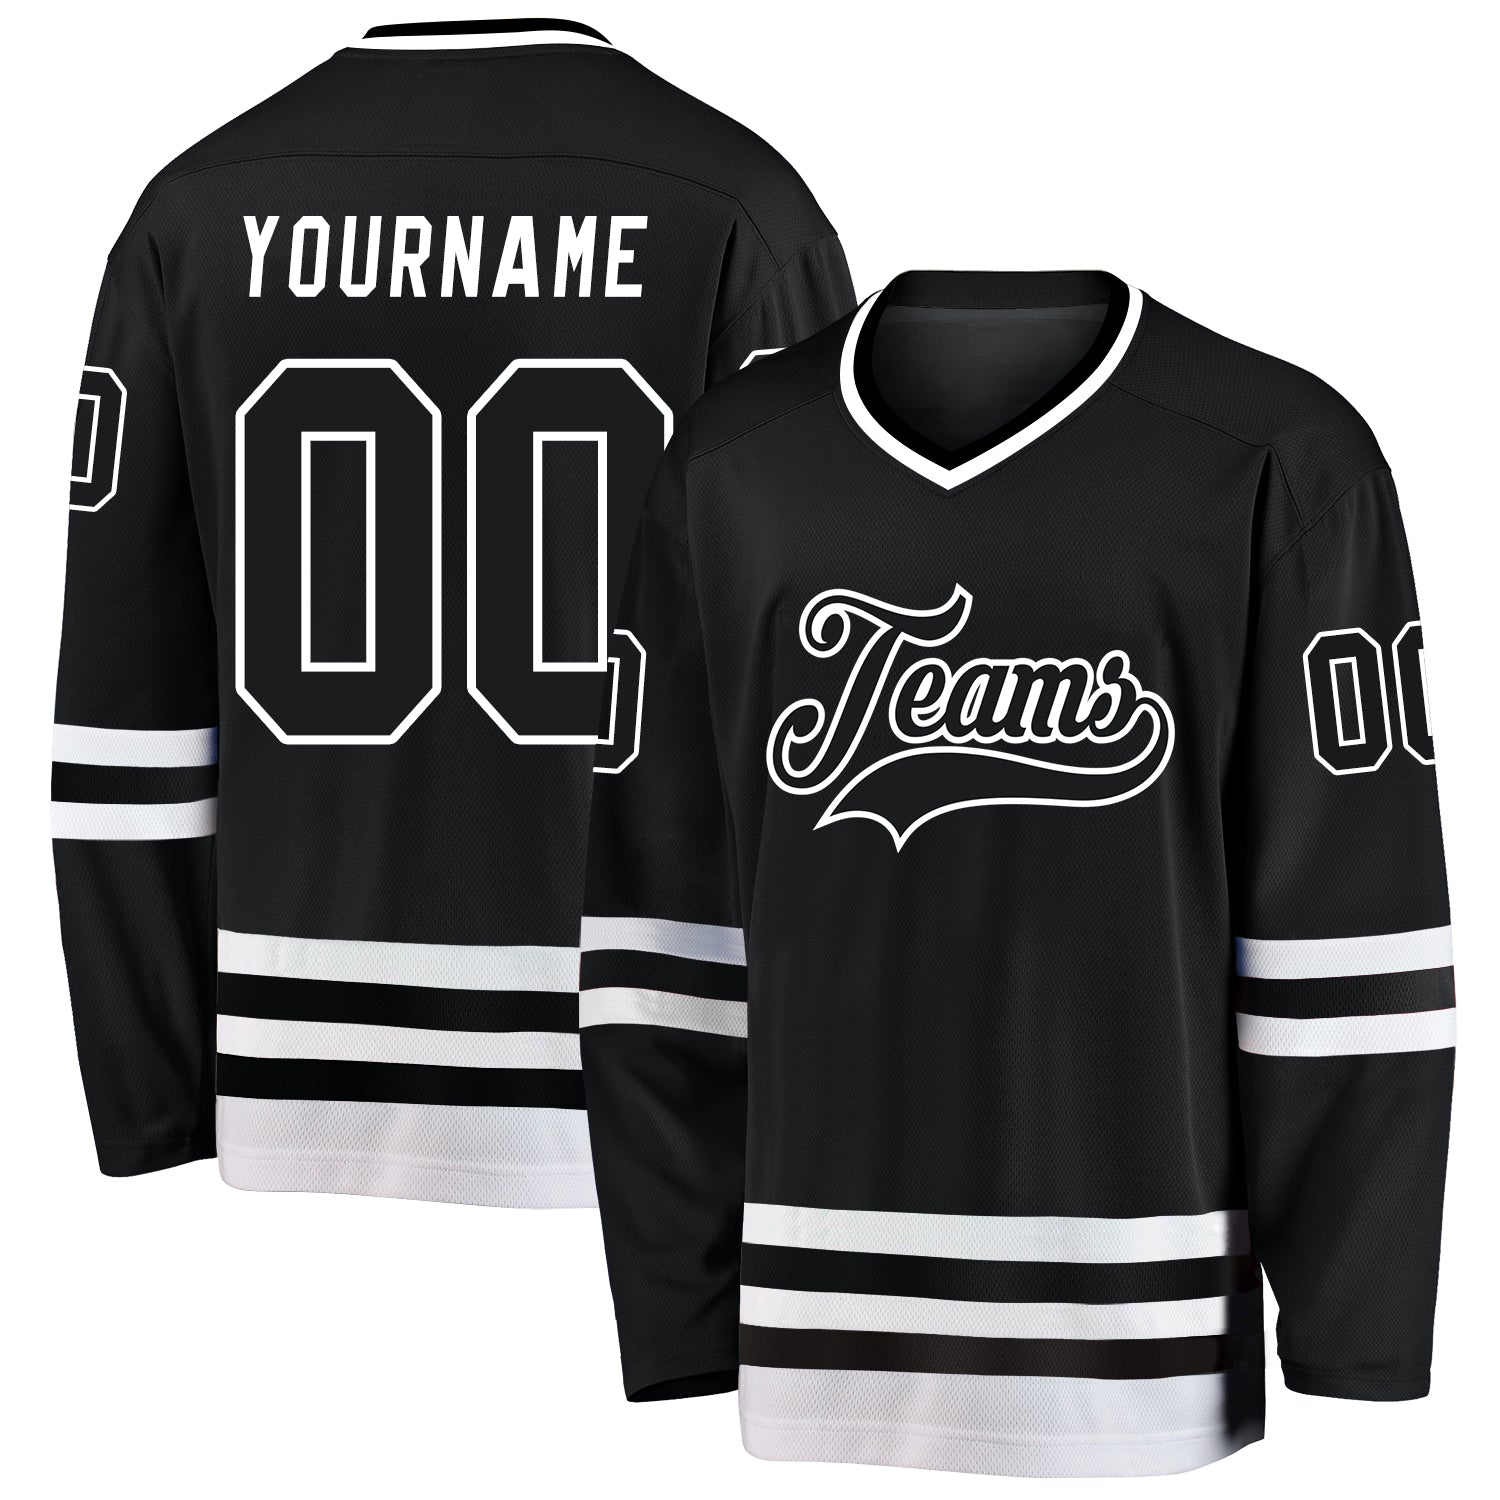 Black by Popular Demand® Unisex Hockey Jersey Shirt